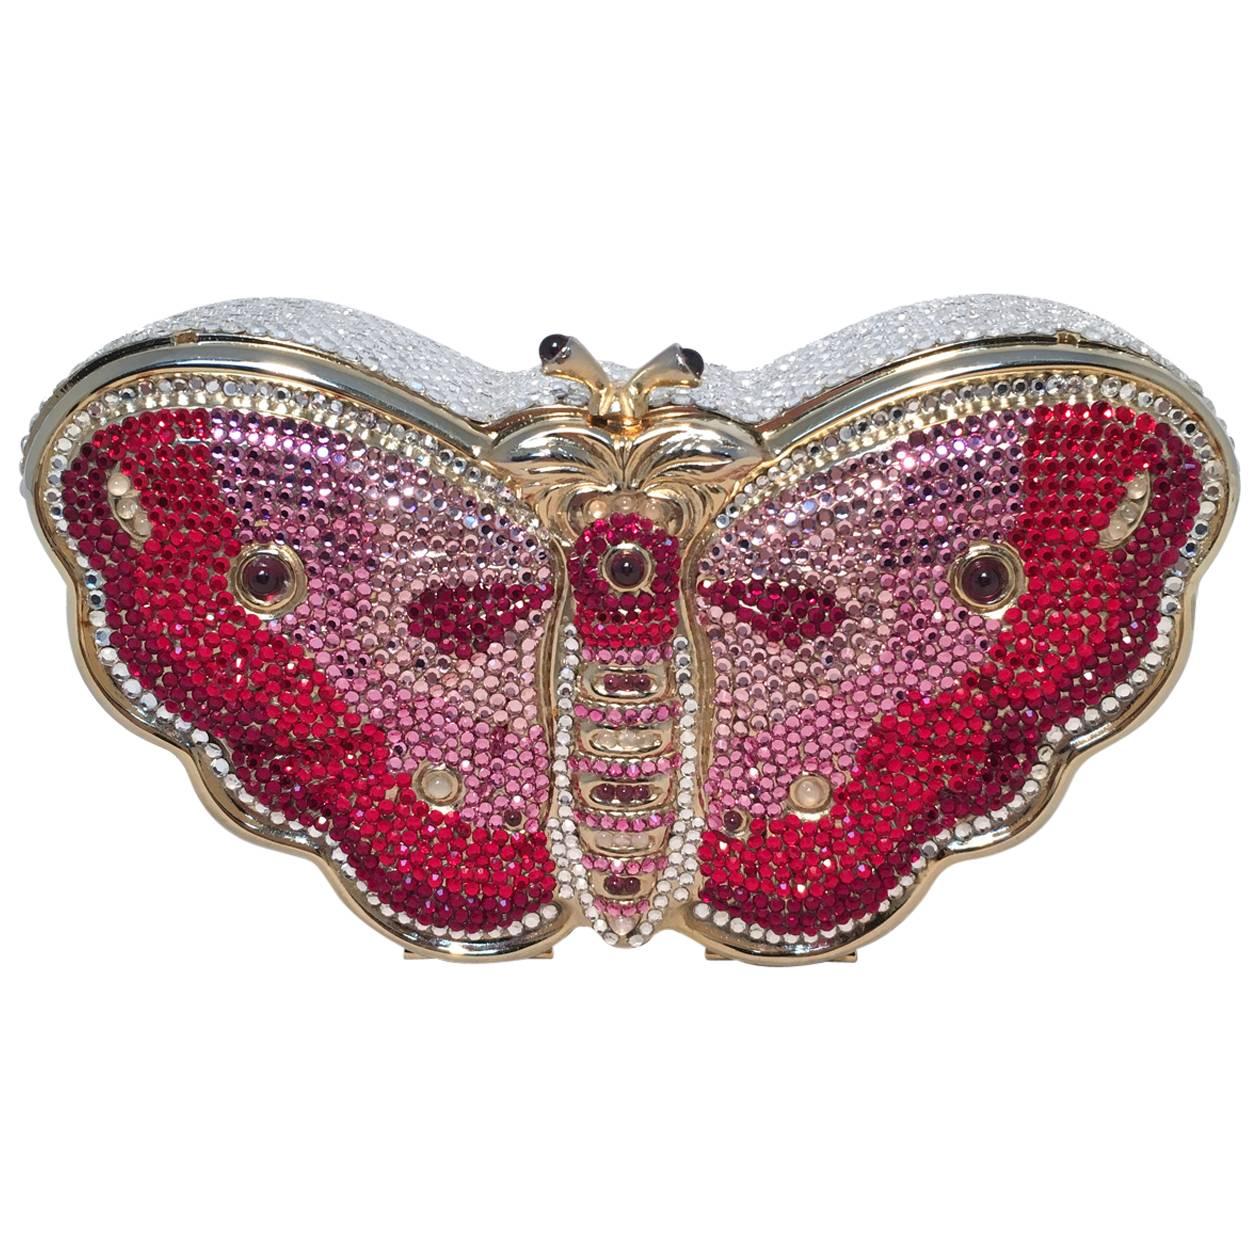 Judith Leiber Swarovksi Crystal Butterfly Minaudiere